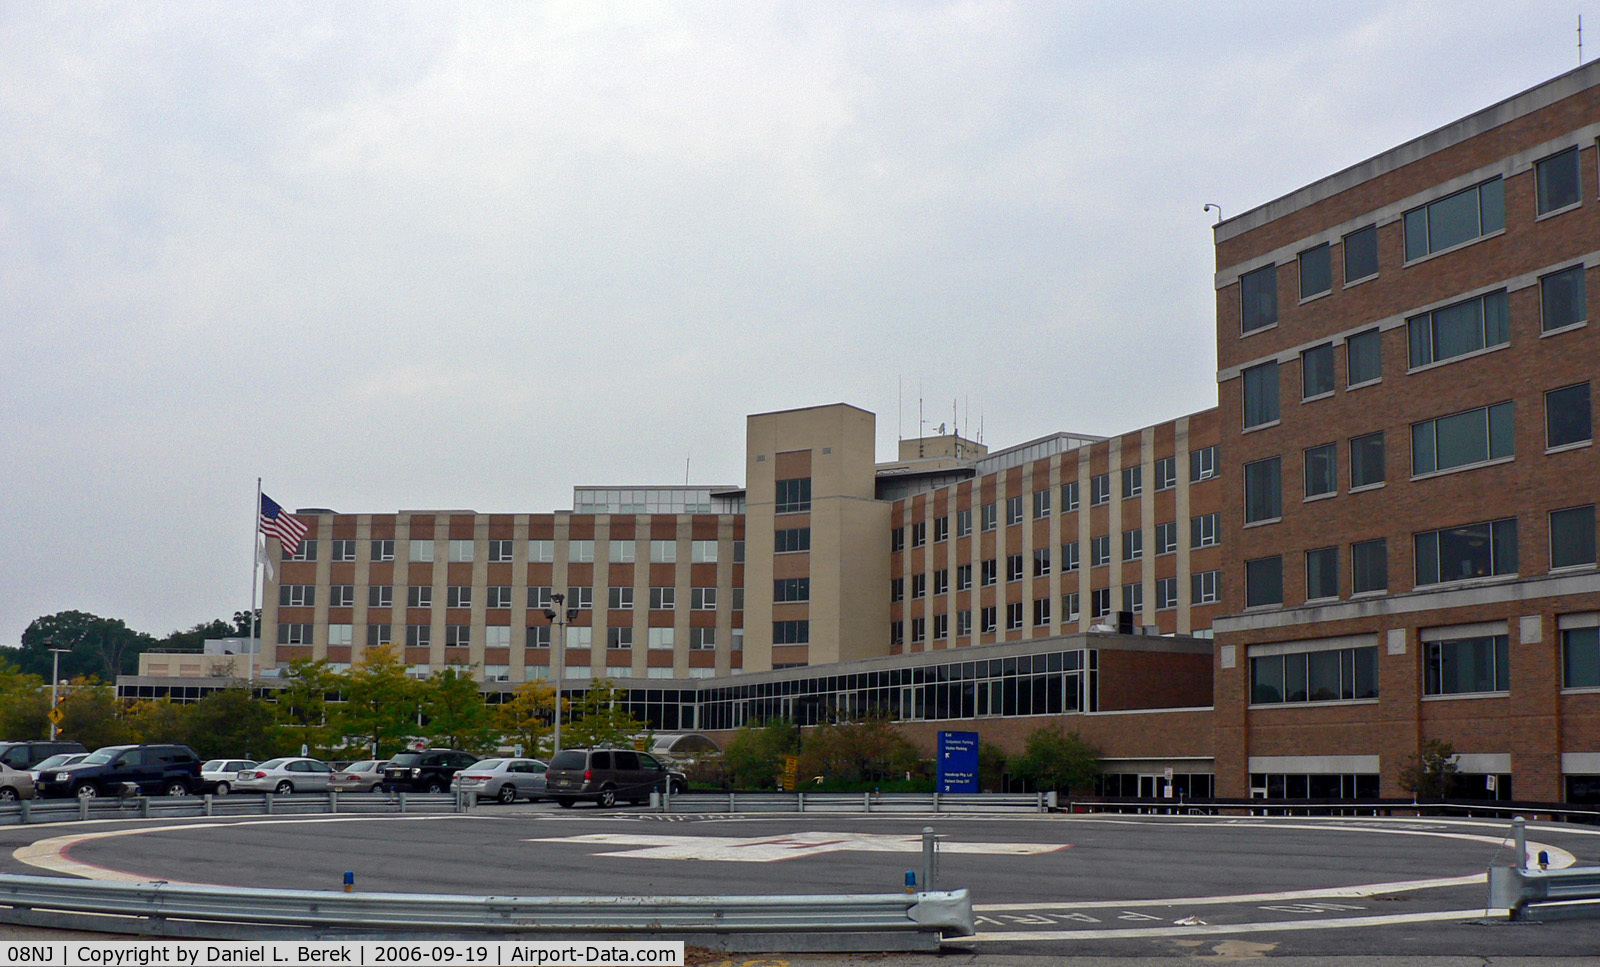 St Barnabas Medical Center Heliport (08NJ) - This heliport serves the emergency wing of Saint Barnabas Medical Center, Livingston, NJ.